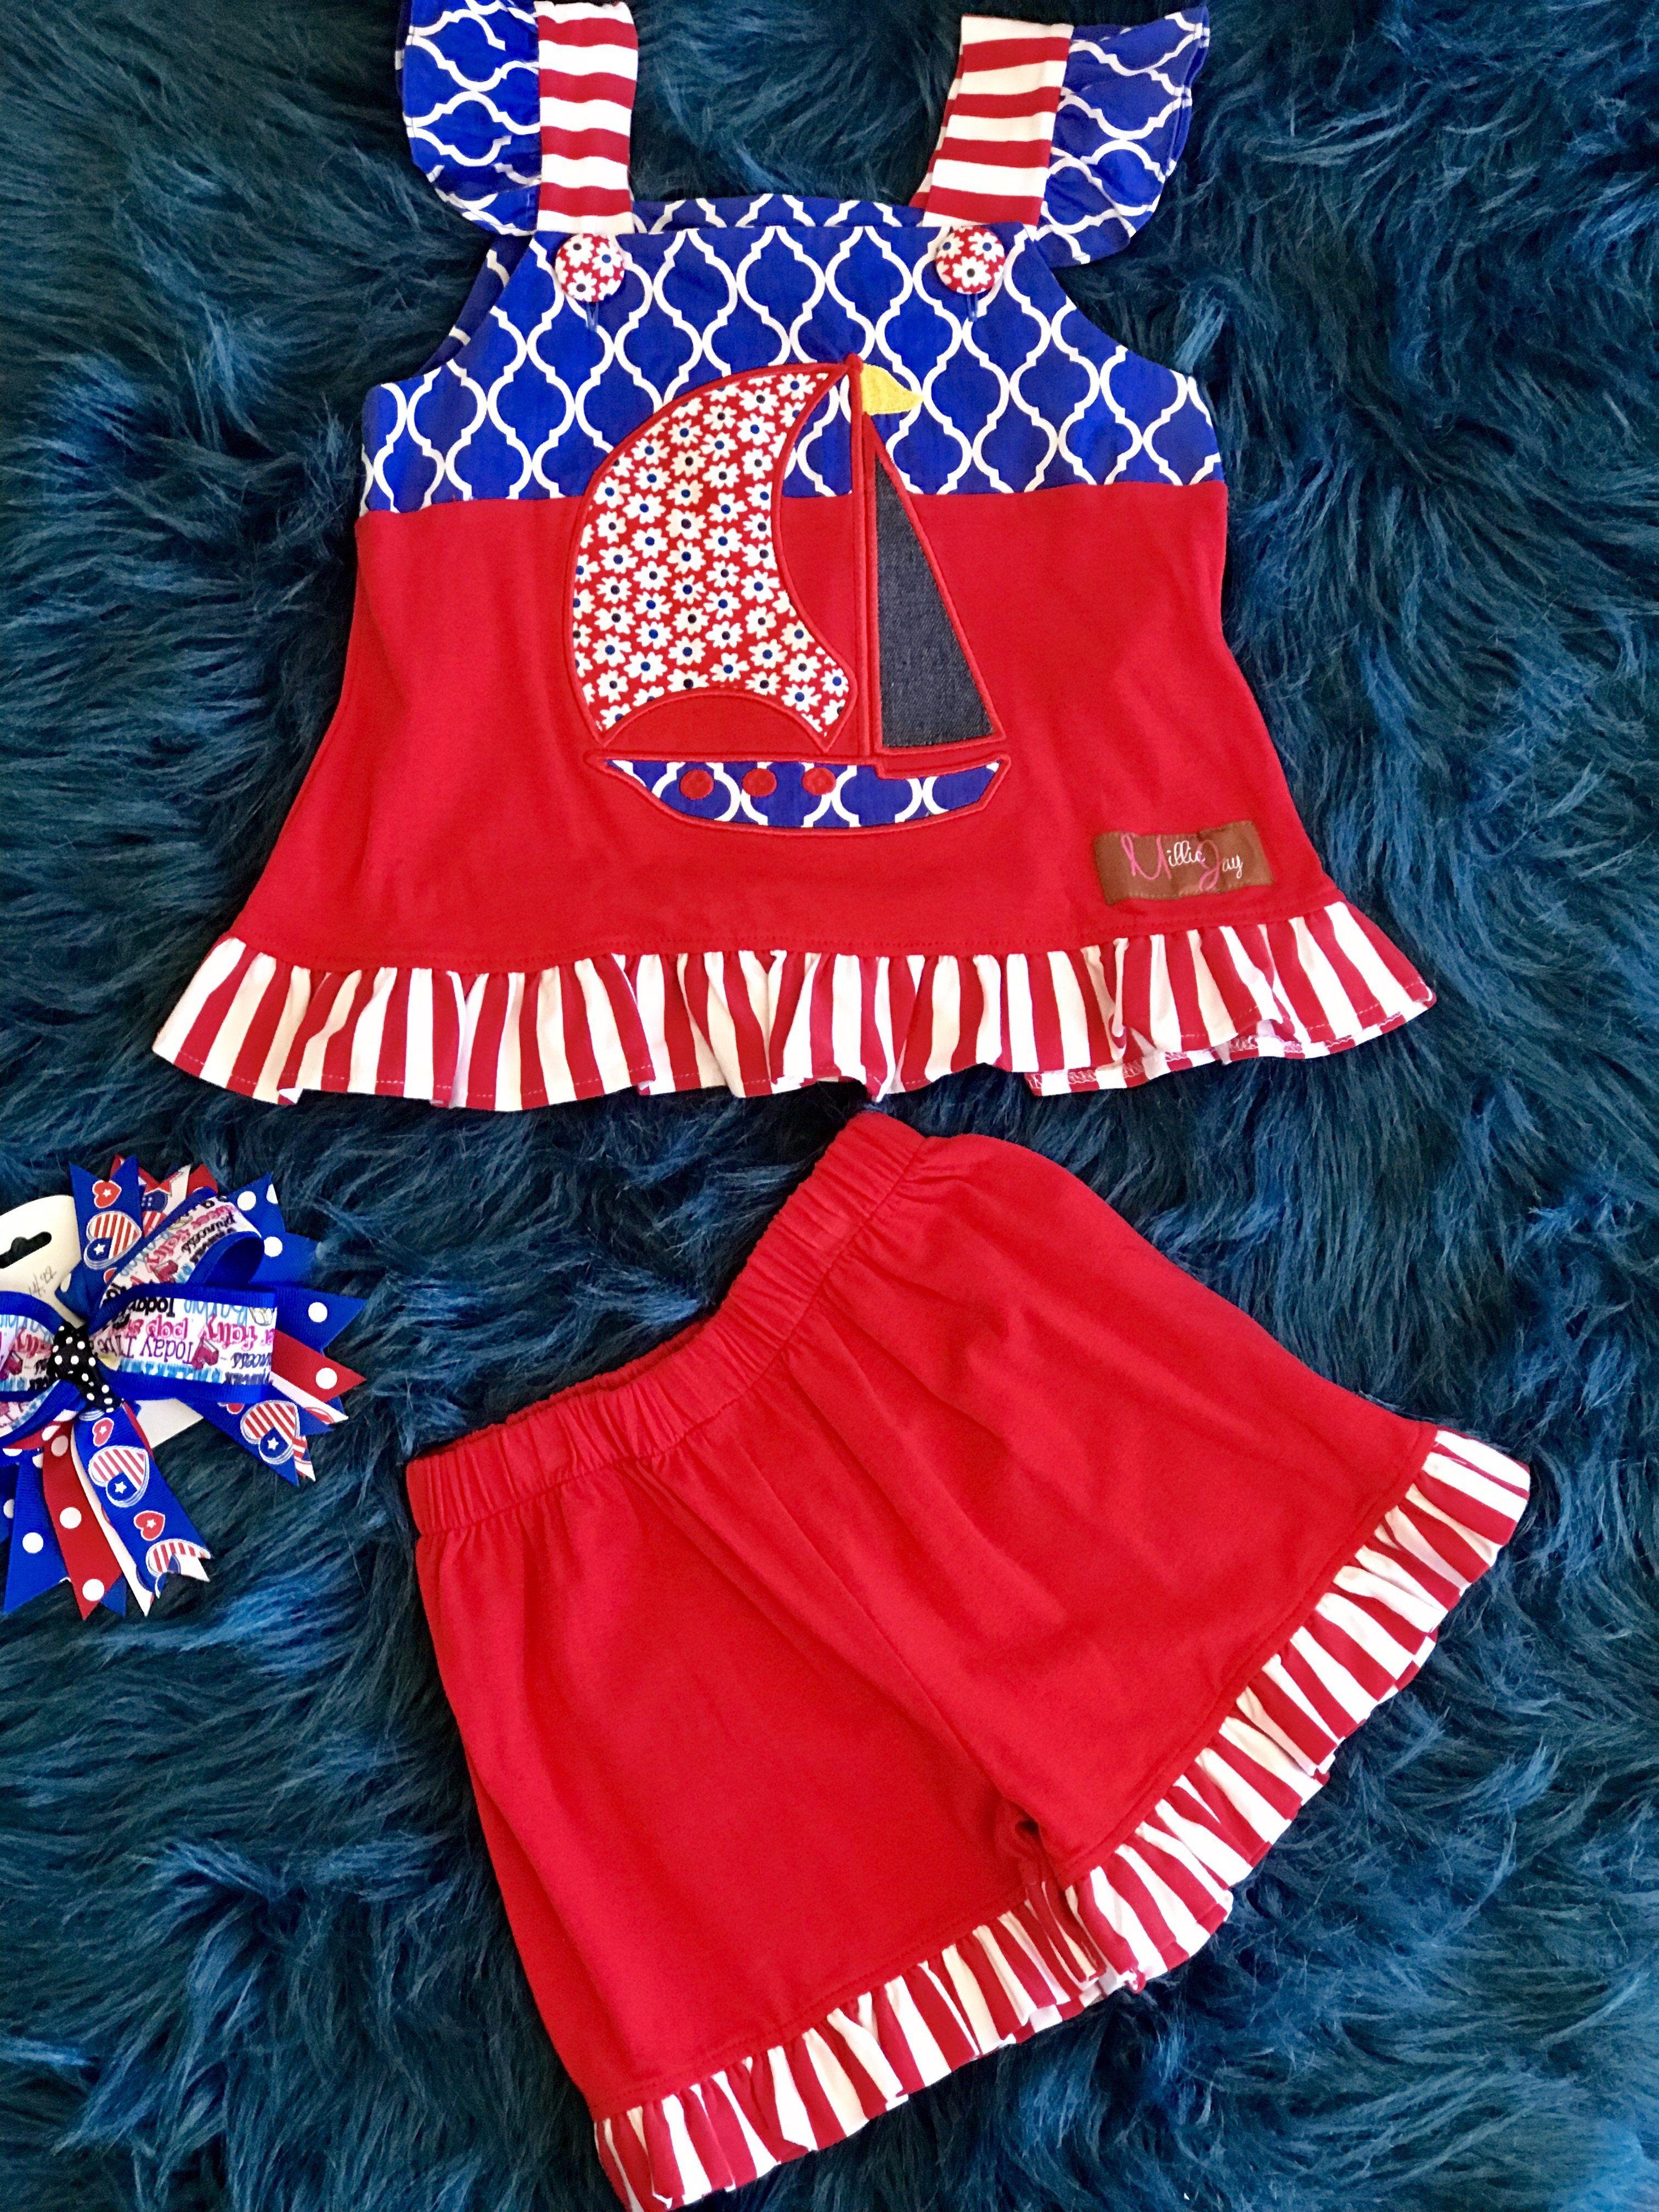 Red White Blue Sail Logo - Millie Jay Summer Fun Red/White/Blue Sail Boat Shorts Set